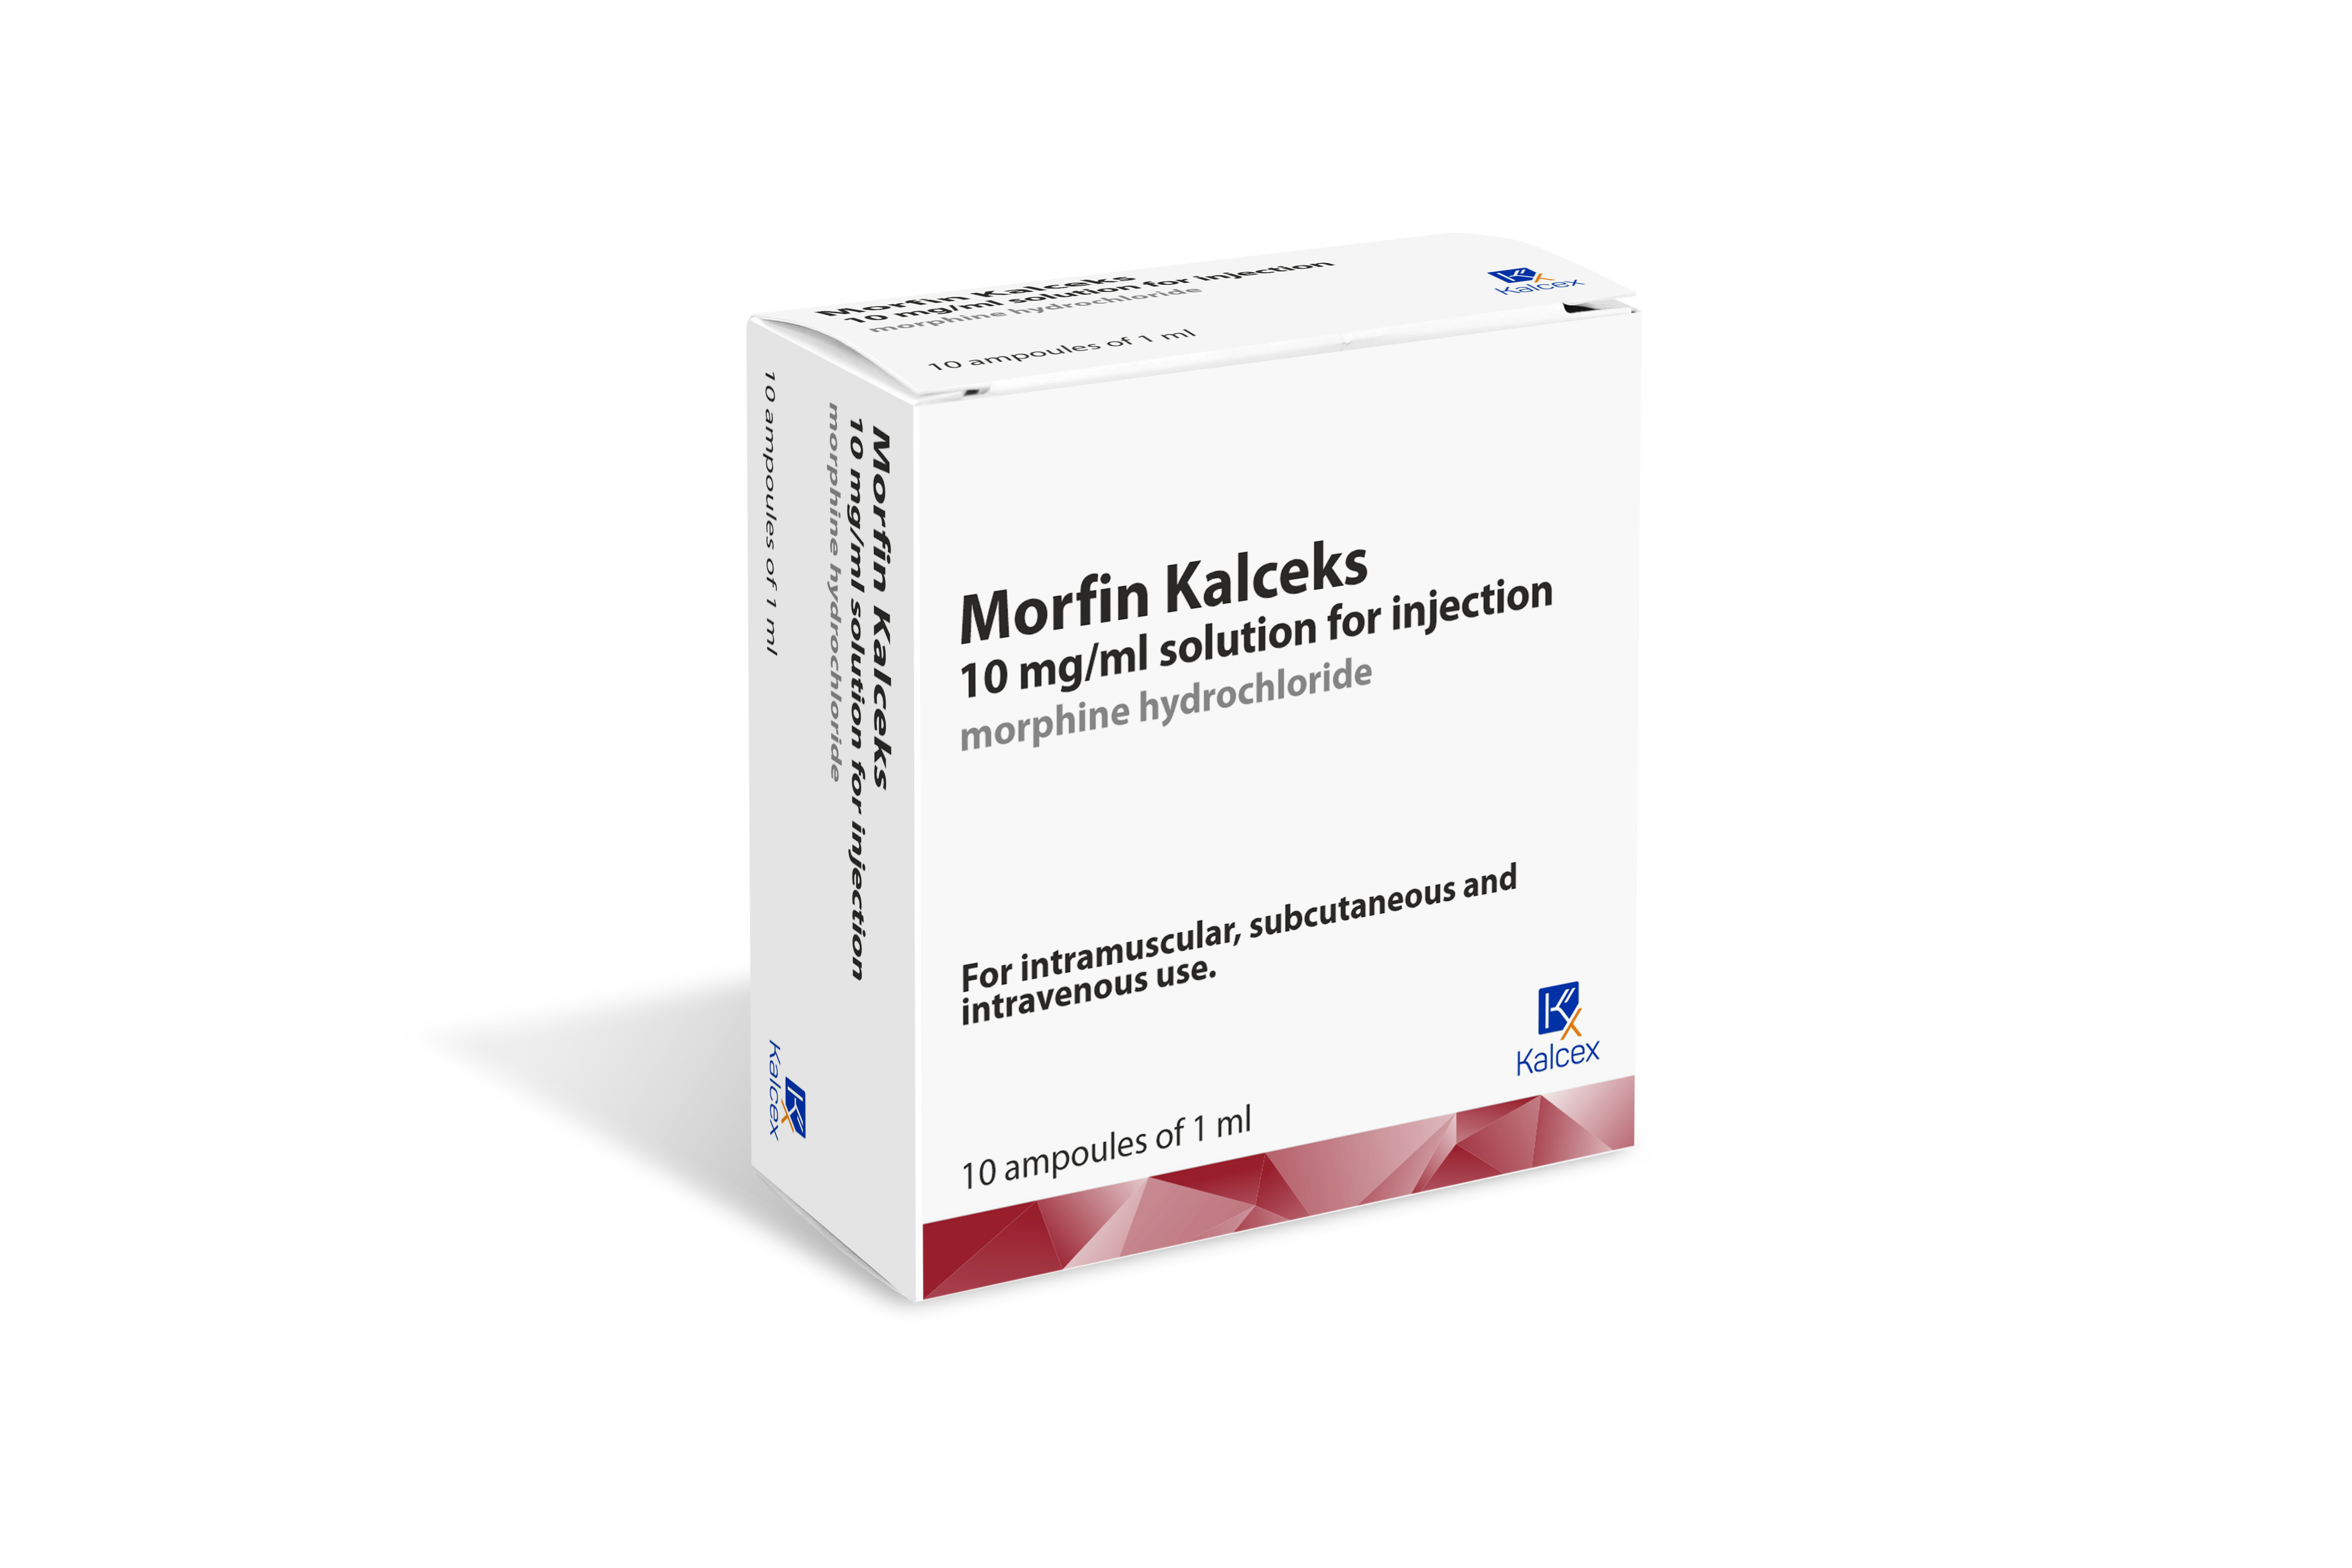 Morphine hydrochloride Kalceks - Kalcex